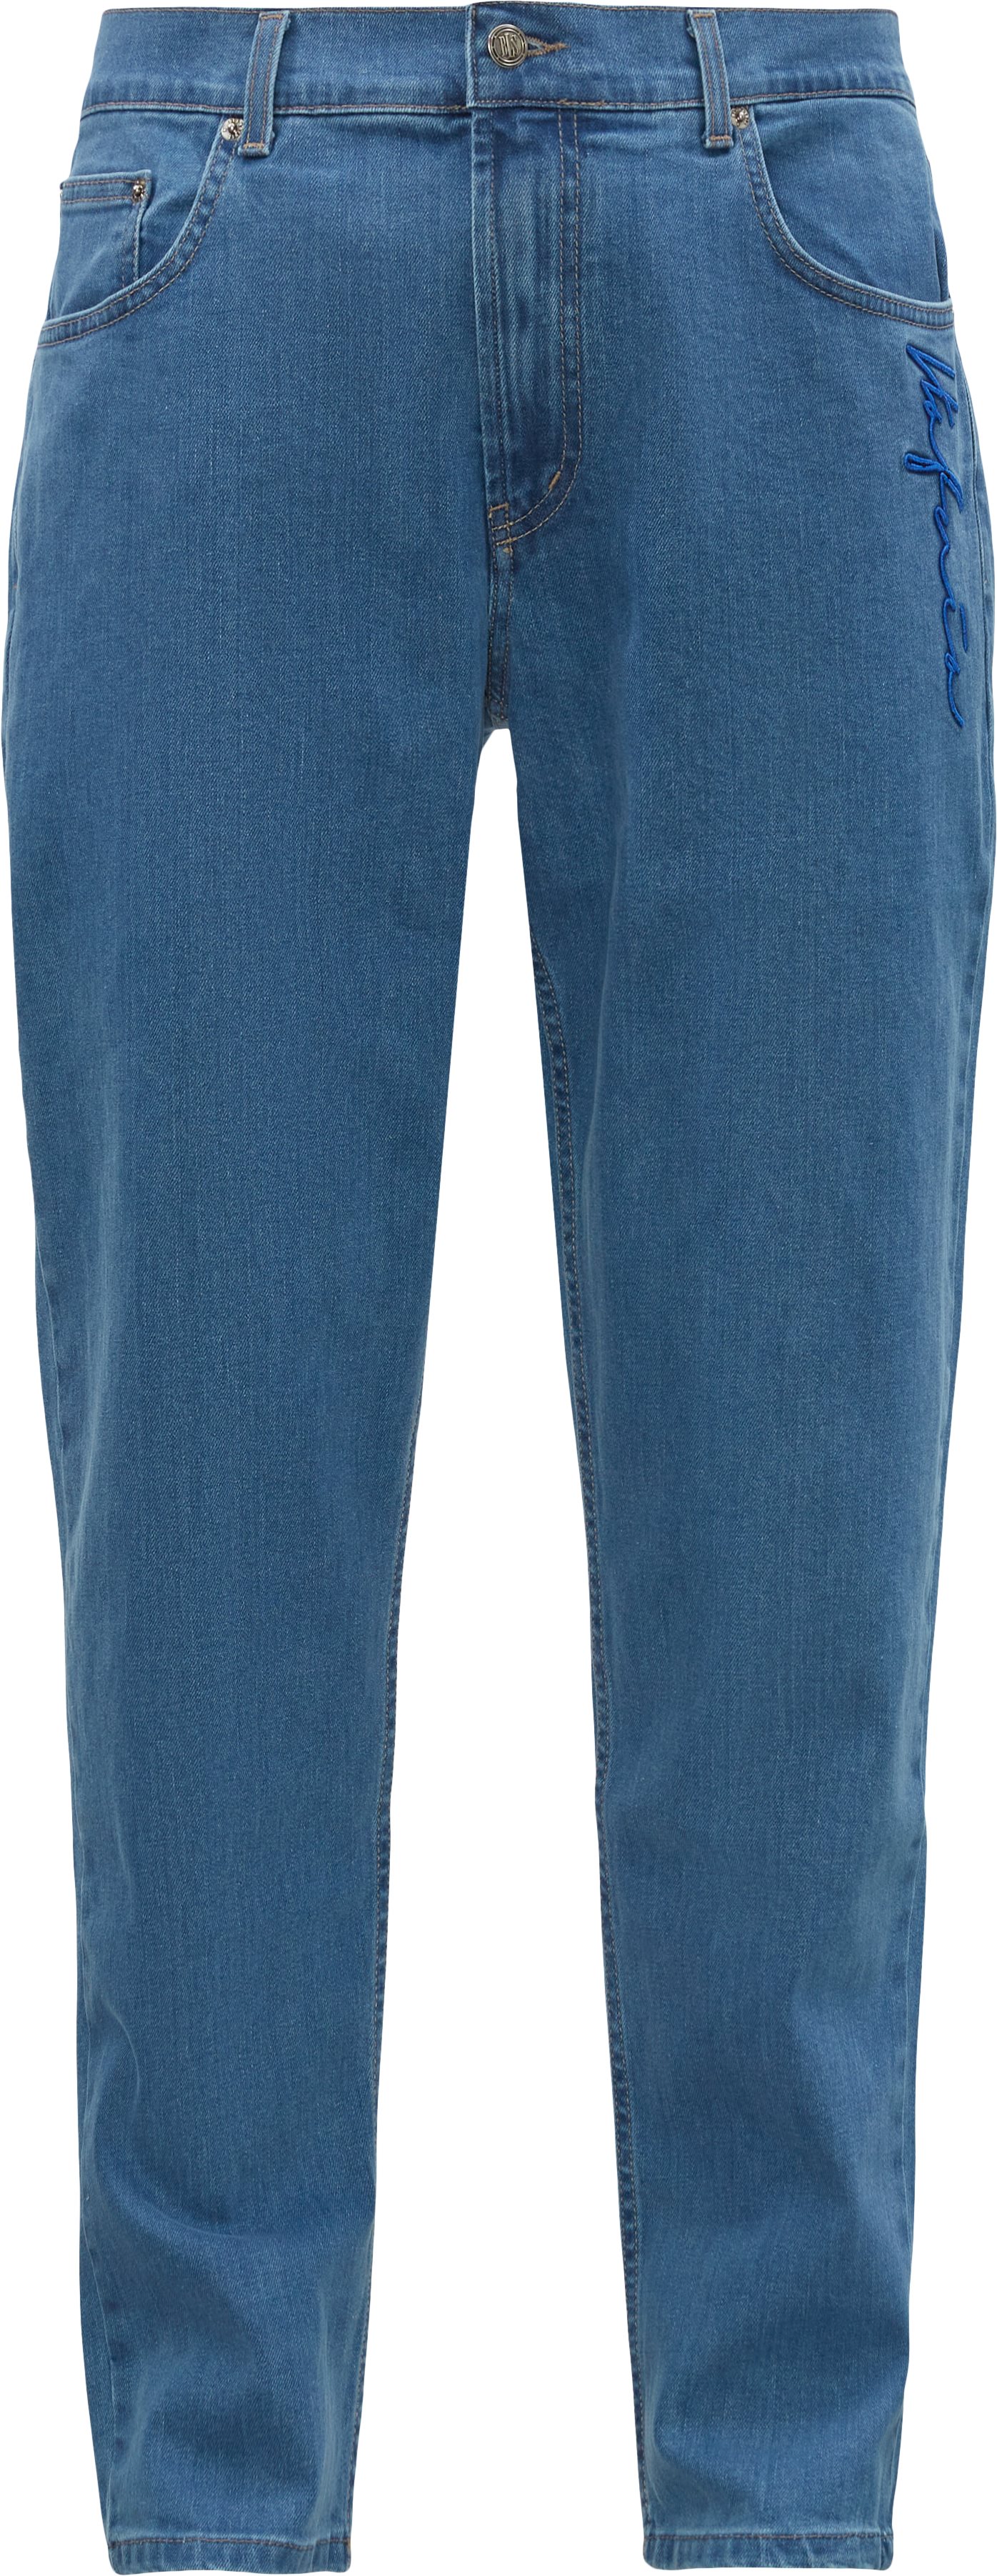 Jeans - Regular fit - Denim